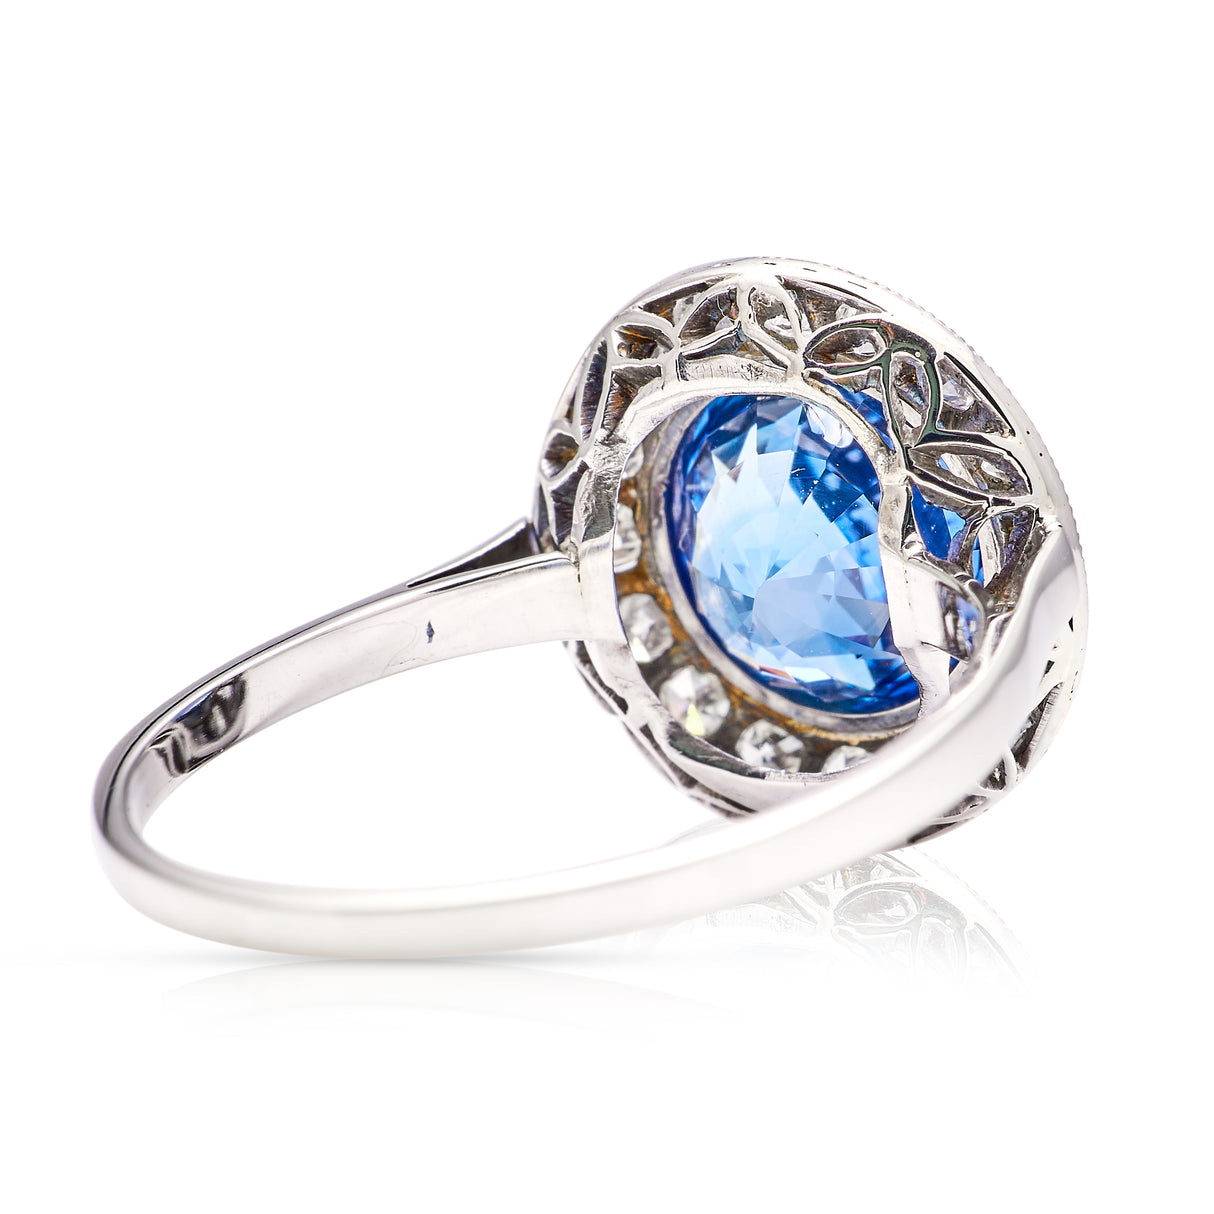 Vintage, Art Deco sapphire and diamond cluster ring, 18ct white gold, platinum